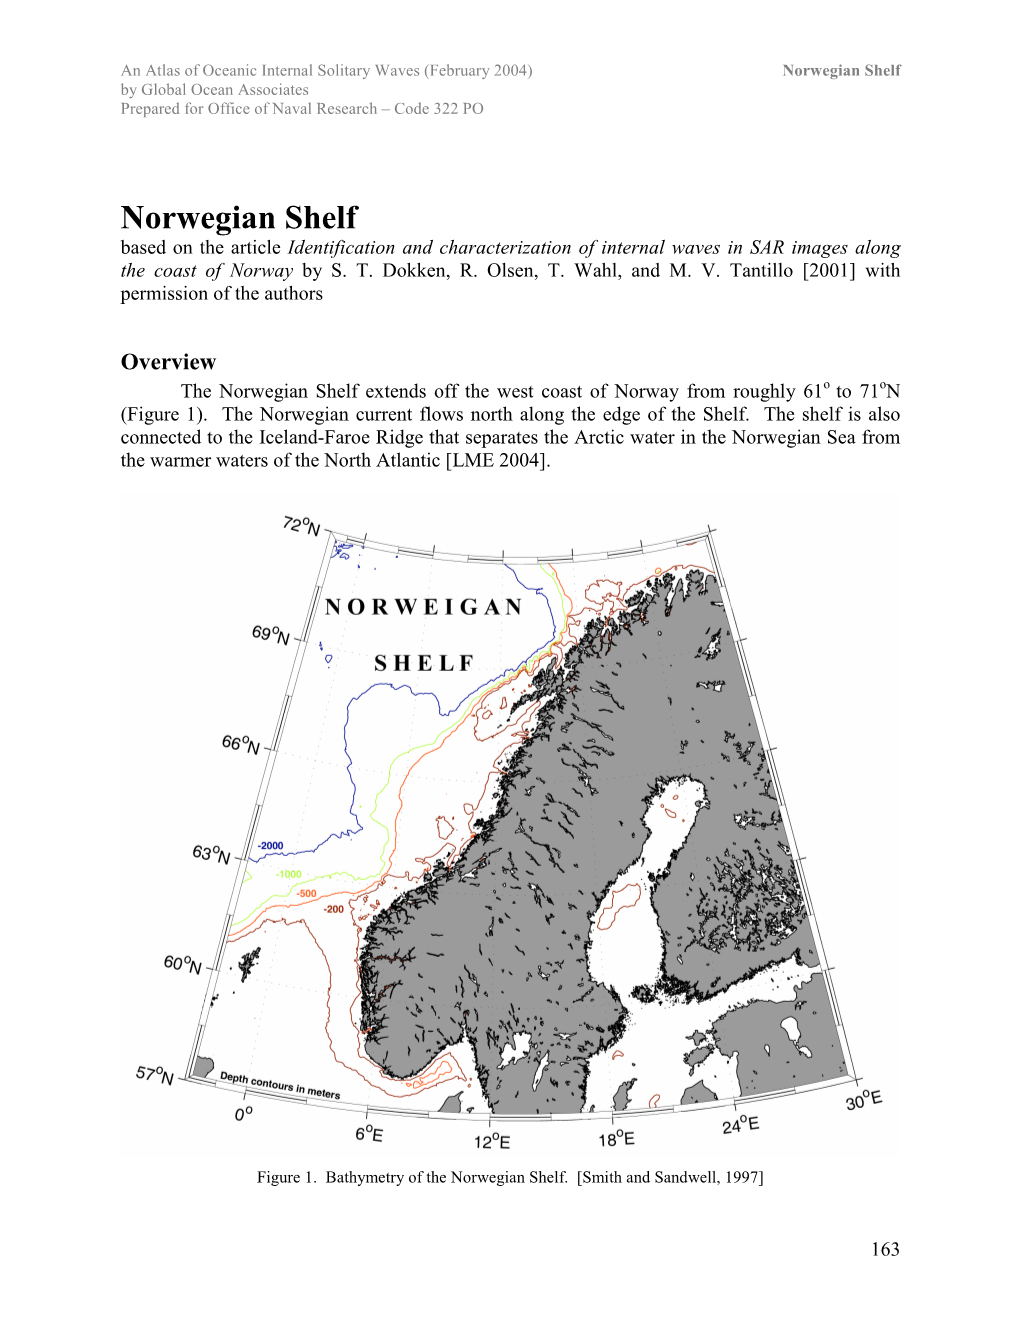 Norwegian Shelf by Global Ocean Associates Prepared for Office of Naval Research – Code 322 PO